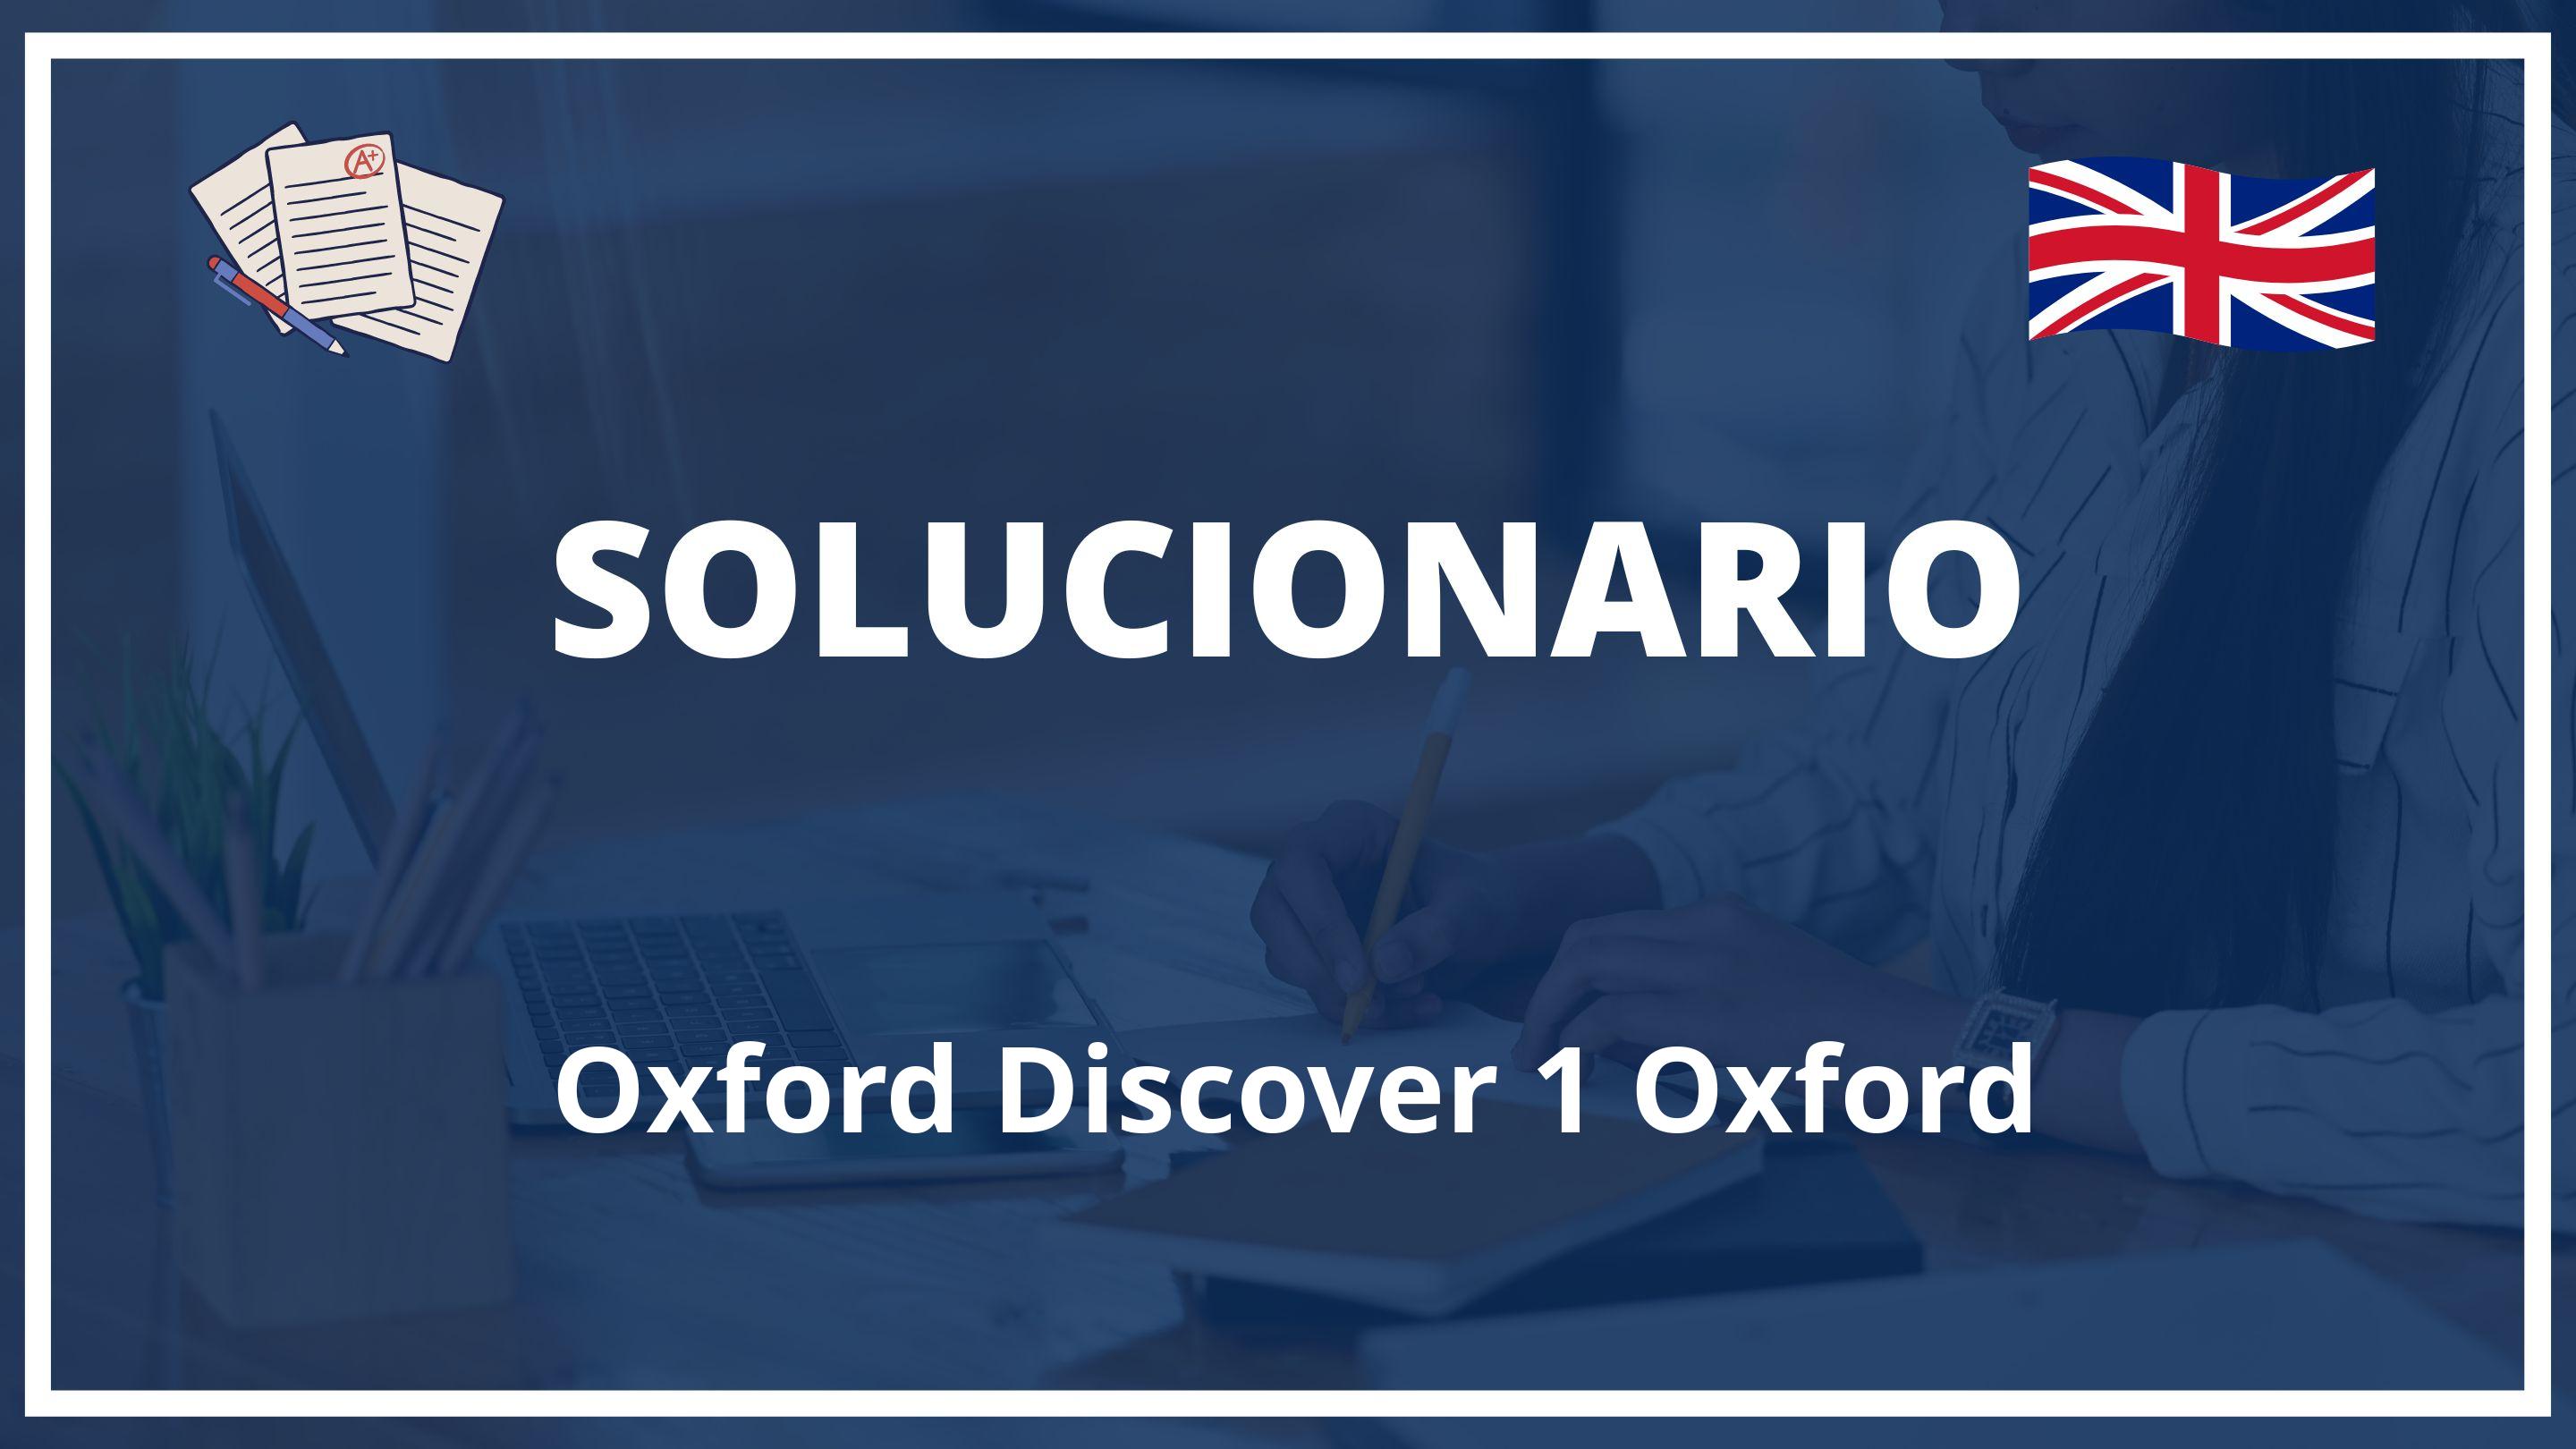 Oxford Discover 1 Oxford